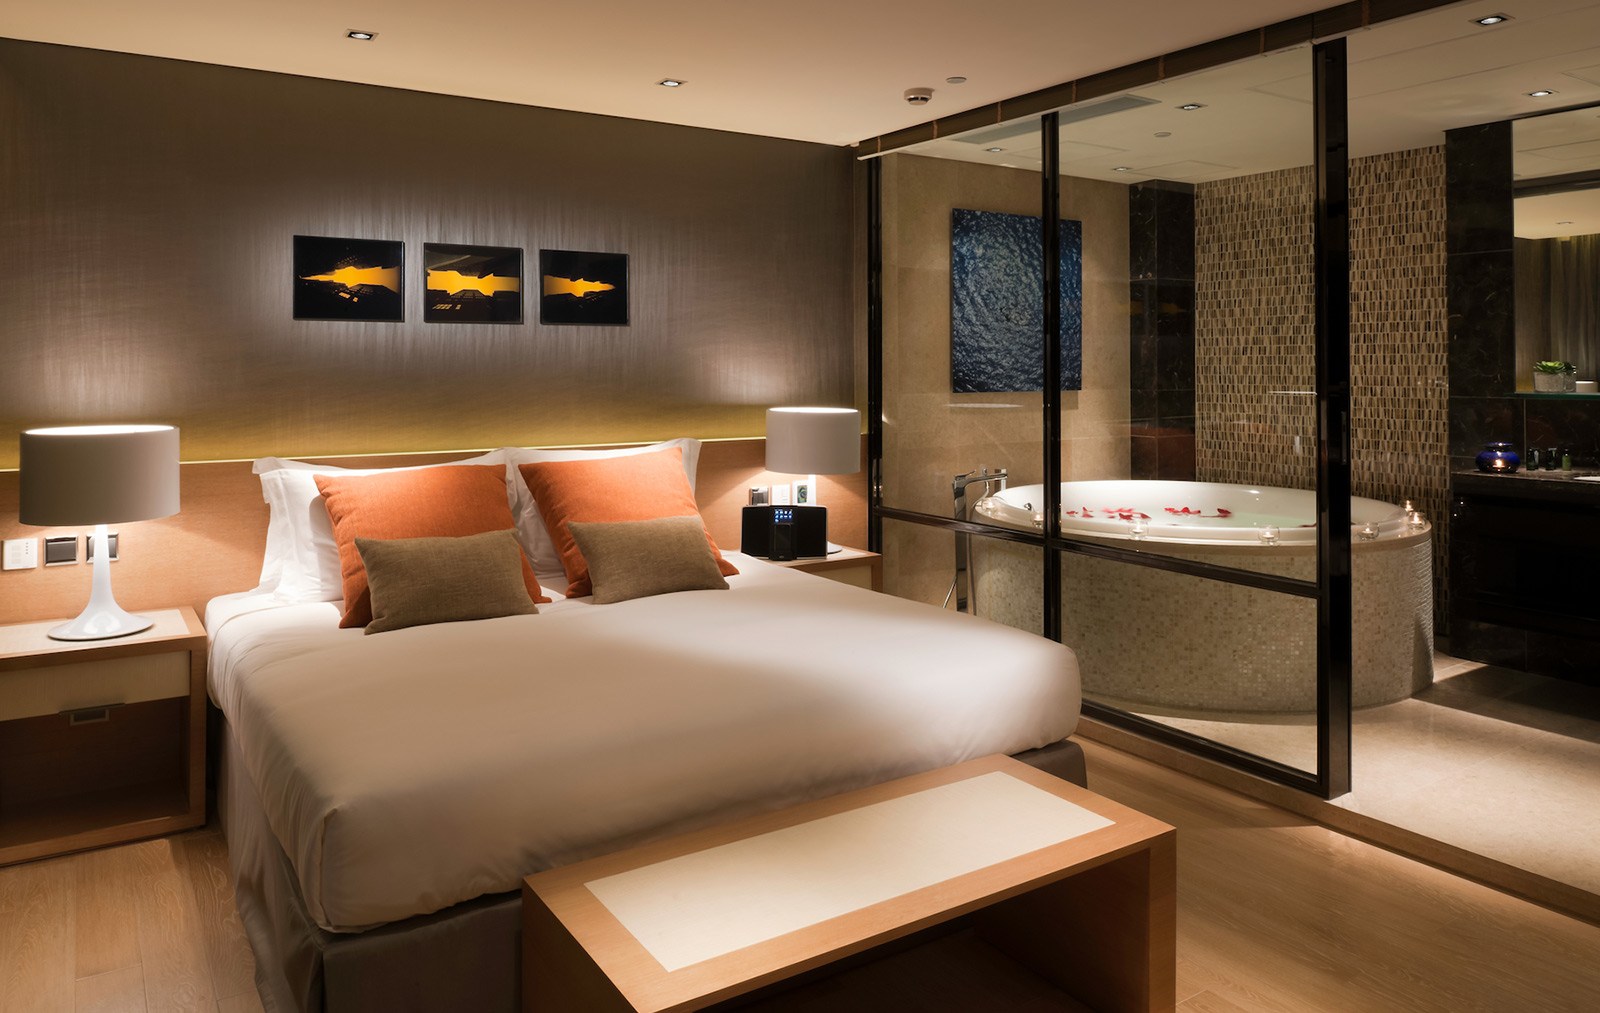 Grand Aqua Suite interior at L'Hotel Island South in Hong Kong